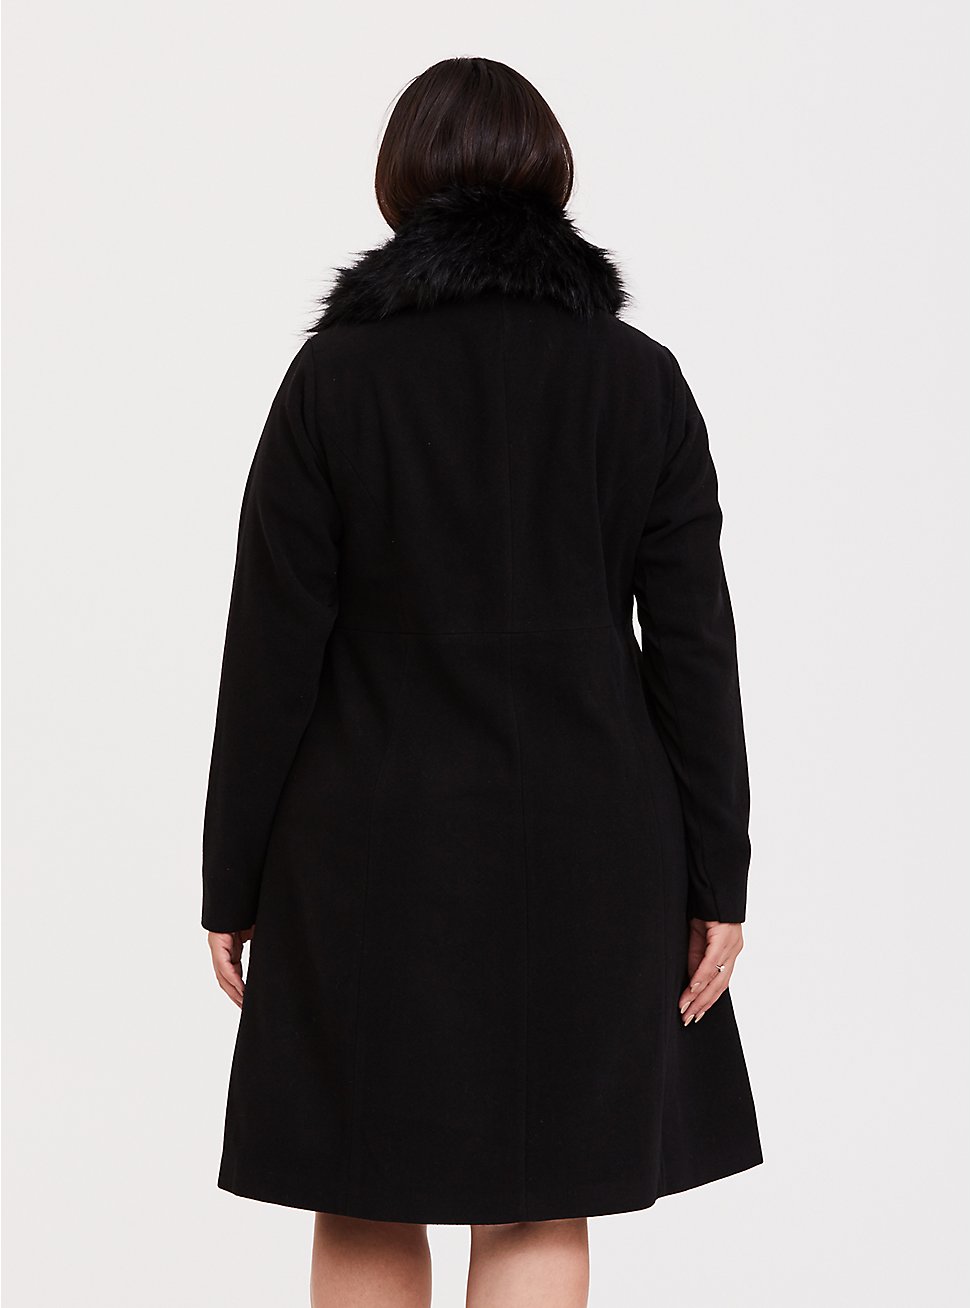 Torrid Size 1 Plaid Wool Bomber Jacket Coat Faux Removable Fur Collar Black 